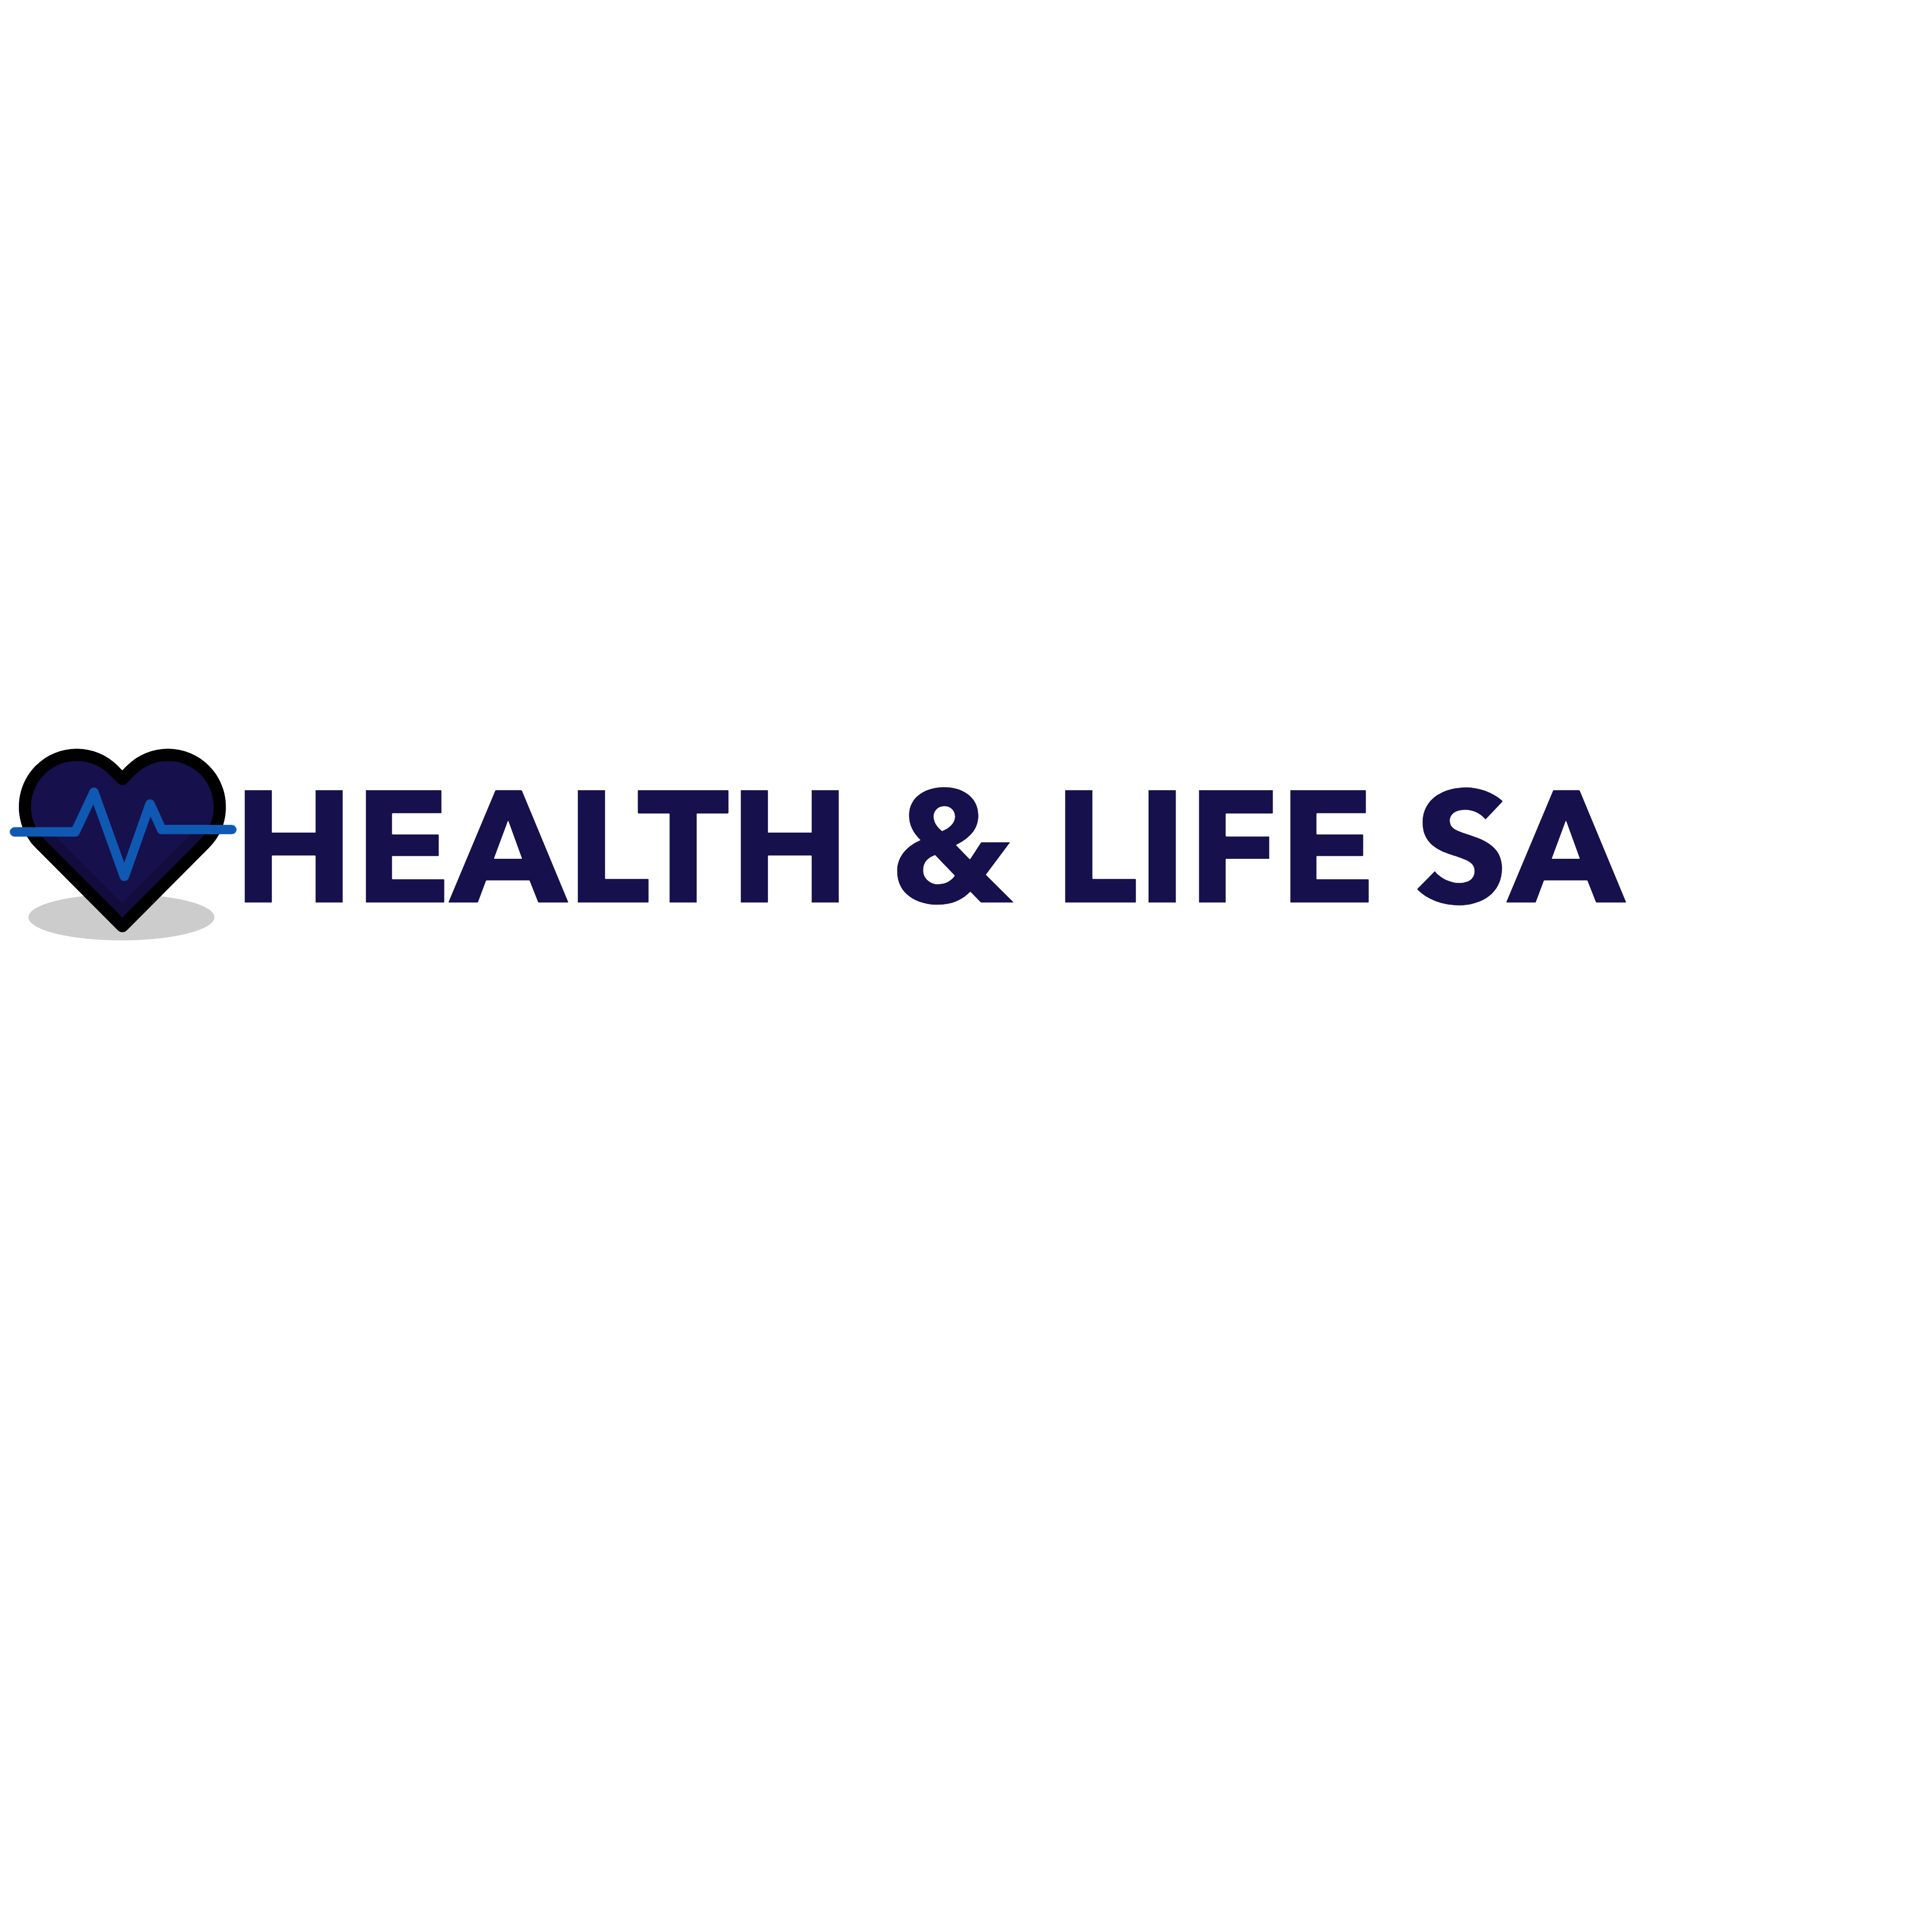 Health & Life Insurance San Antonio